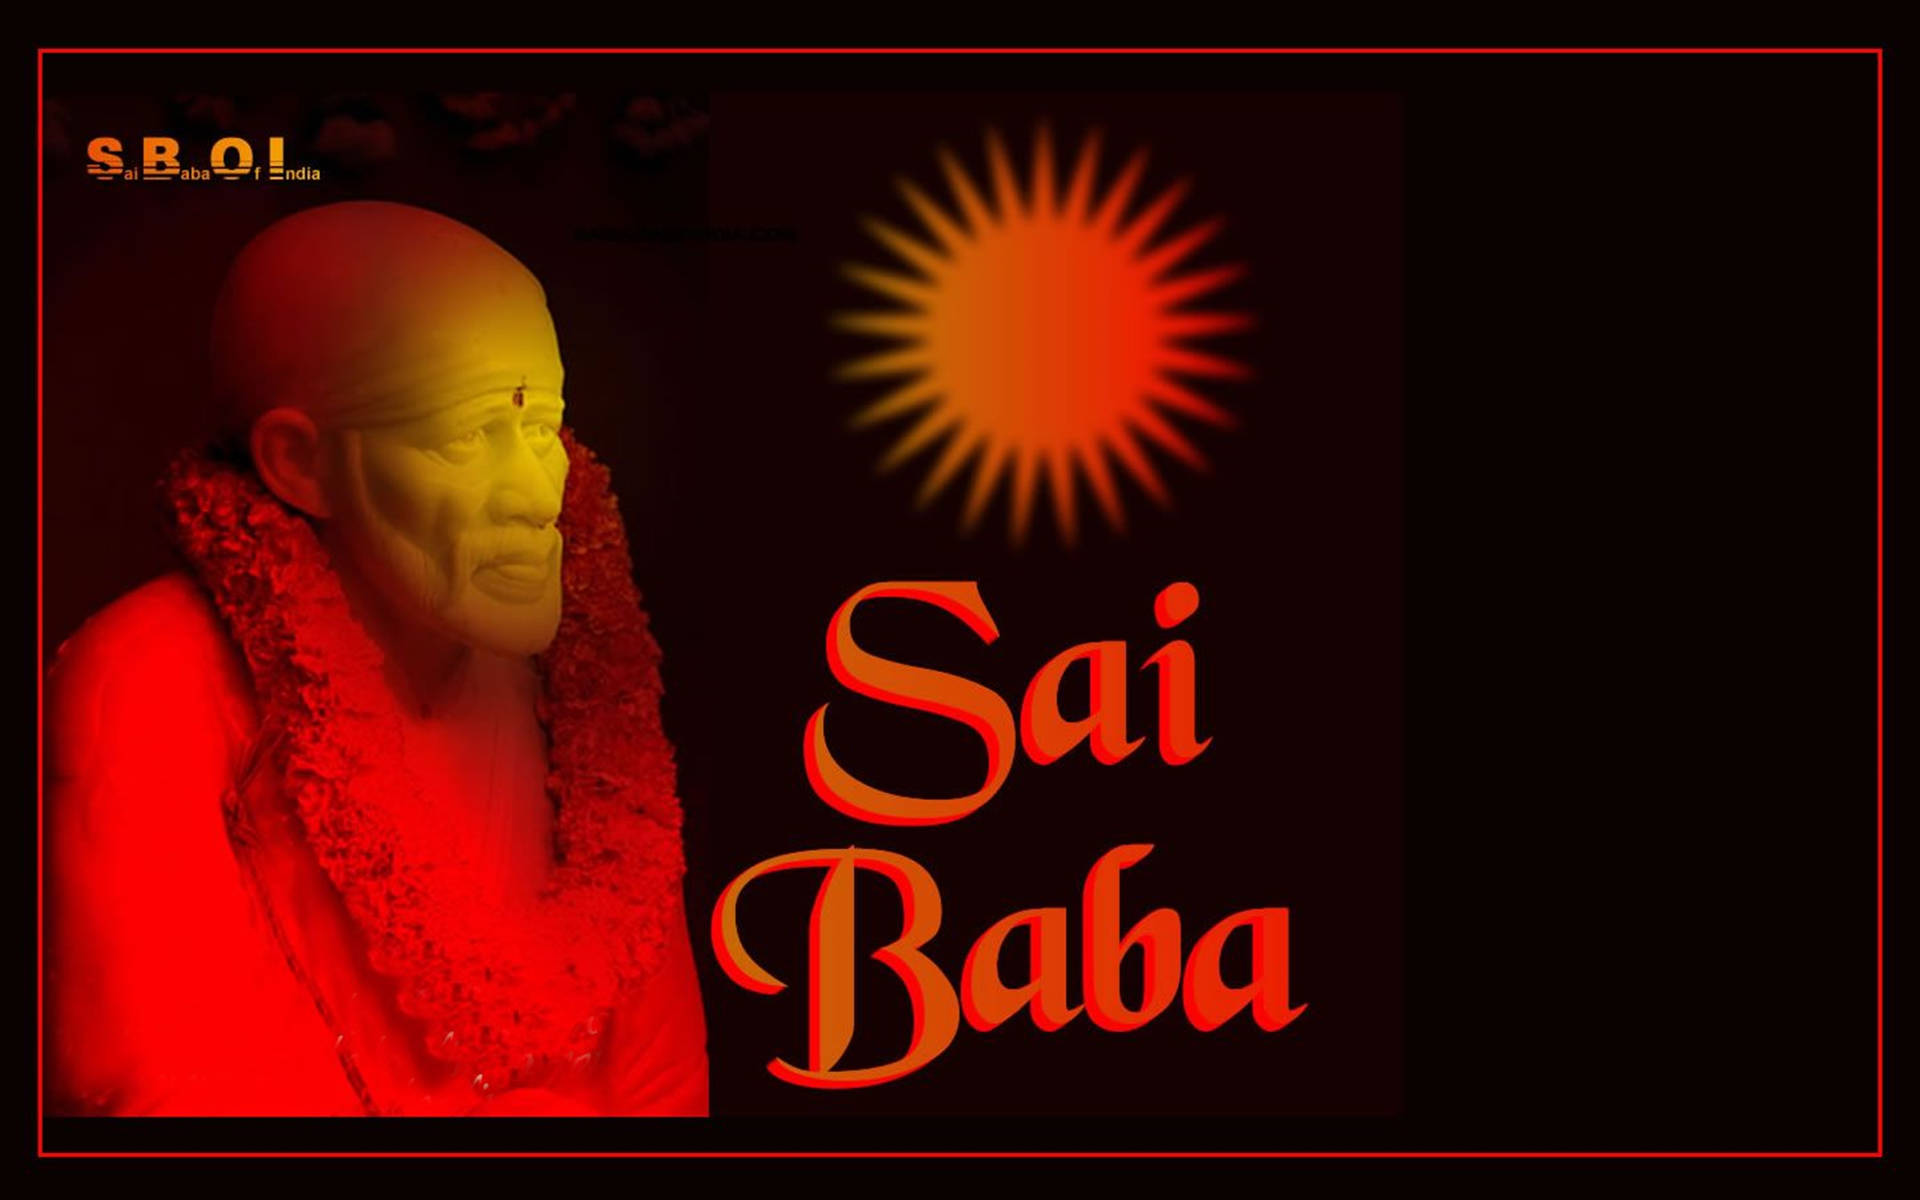 Free Sai Baba Hd Wallpaper Downloads, [100+] Sai Baba Hd Wallpapers for  FREE 